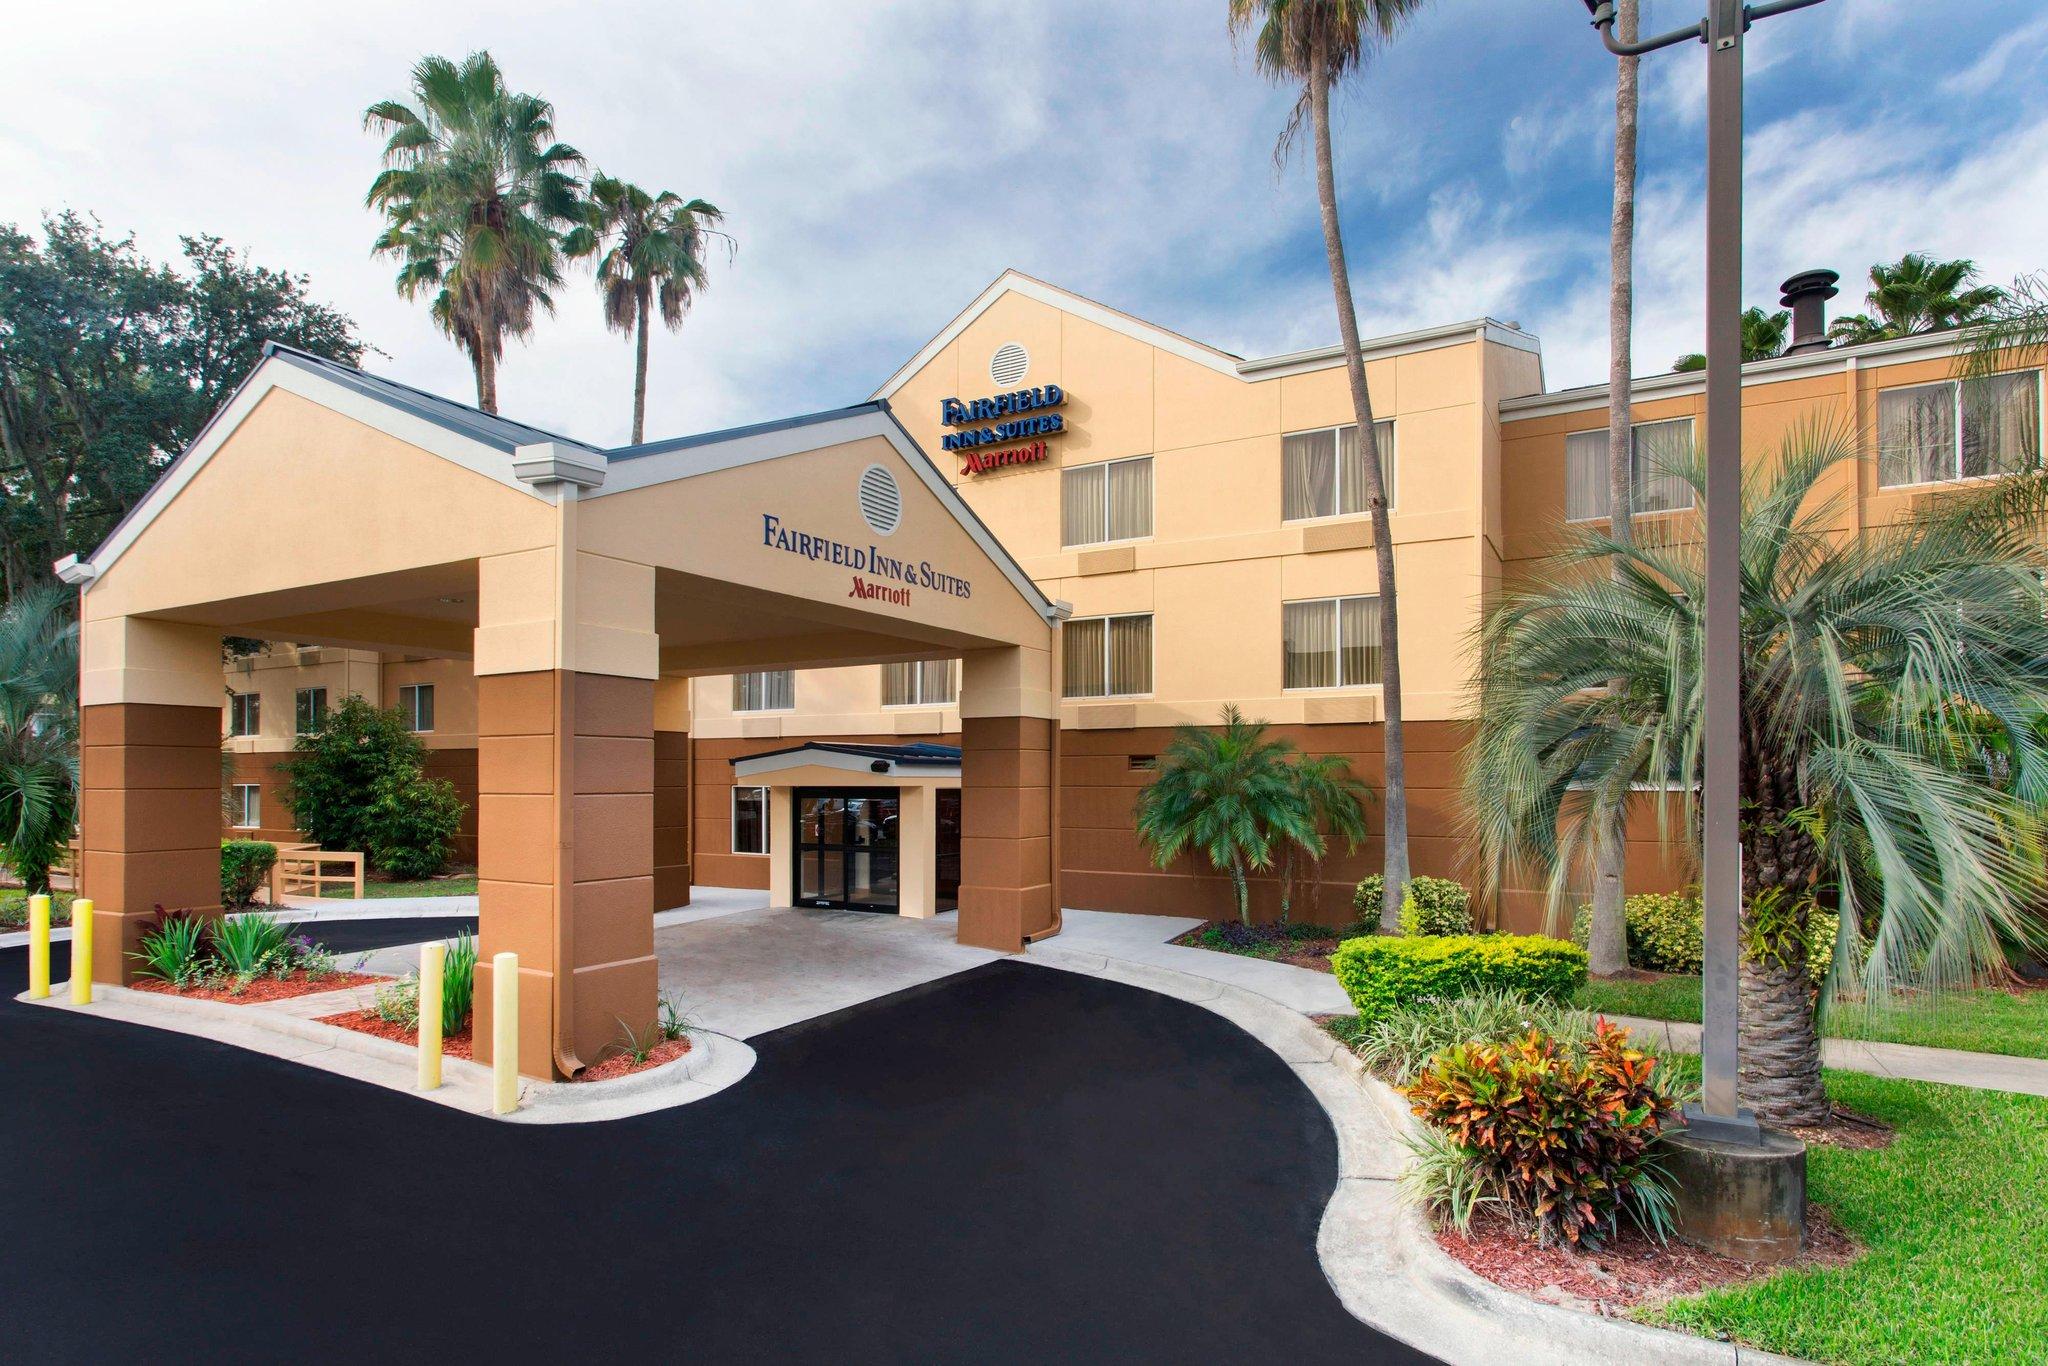 Fairfield Inn & Suites Tampa Brandon in Tampa, FL